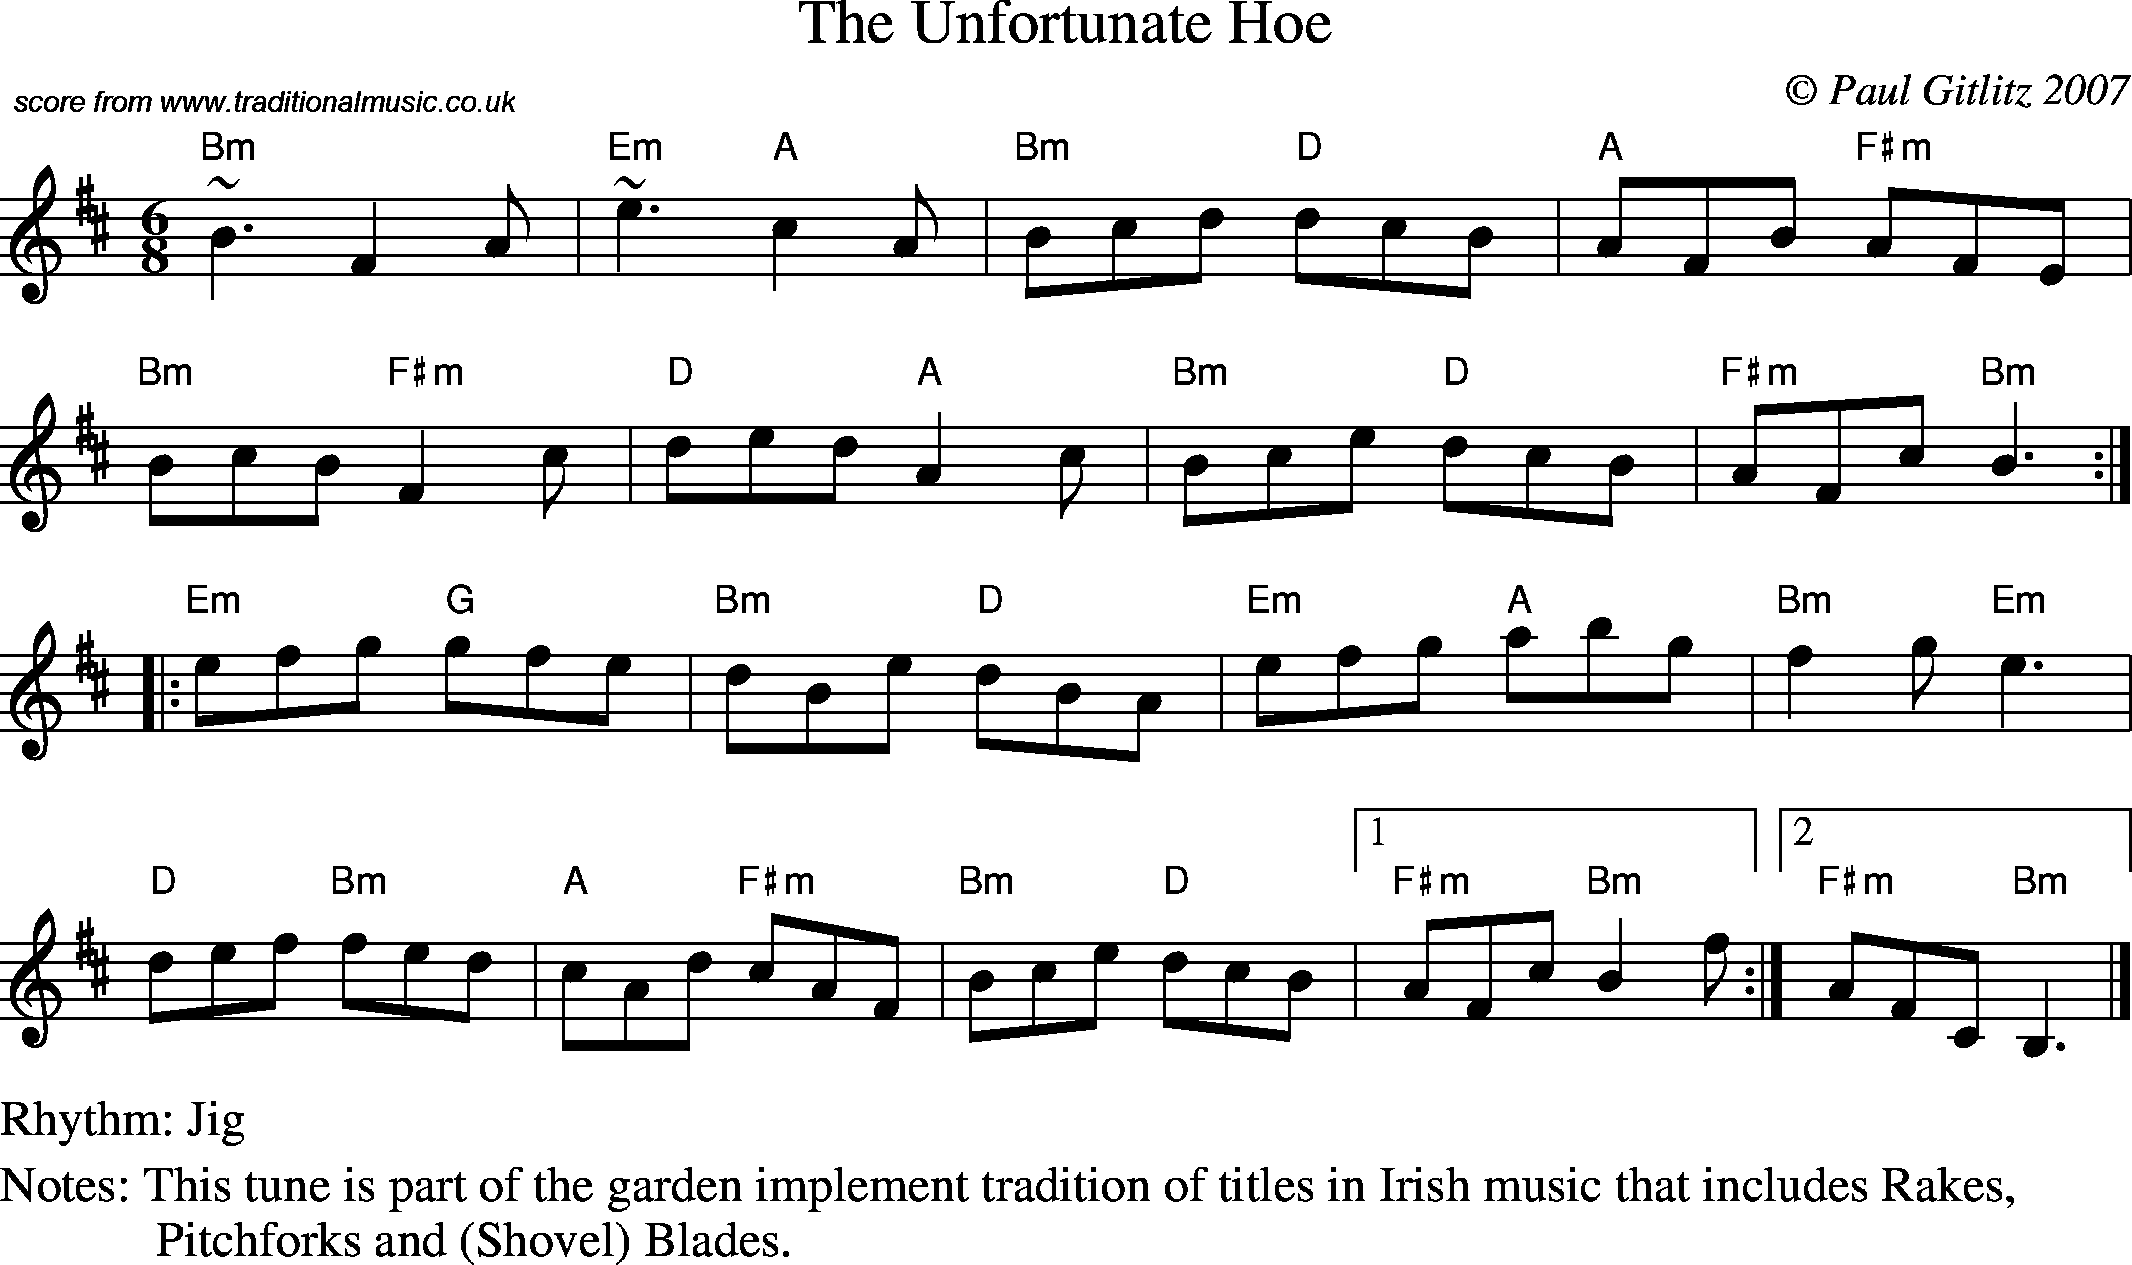 Sheet Music Score for Jig - Unfortunate Hoe, The